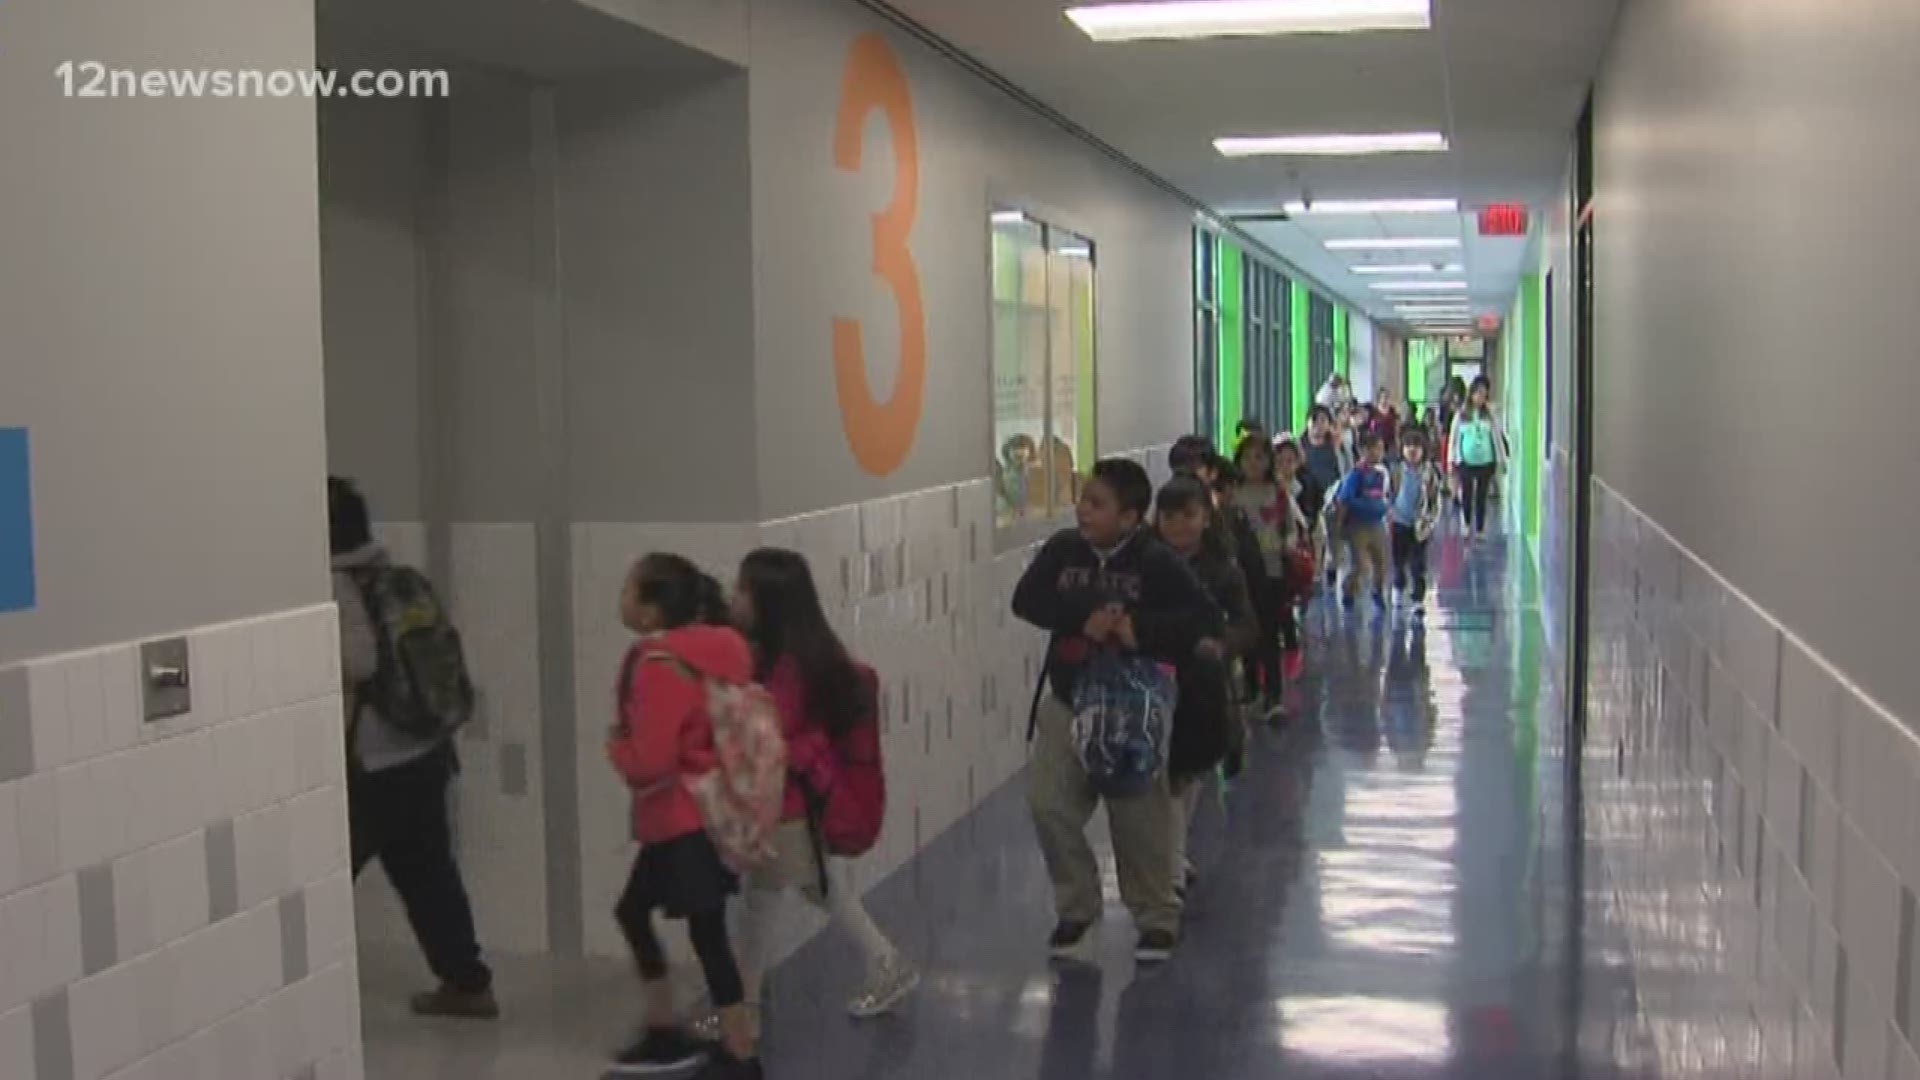 Port Arthur ISD opened the Sam Houston elementary school on Monday, Oct. 8. 